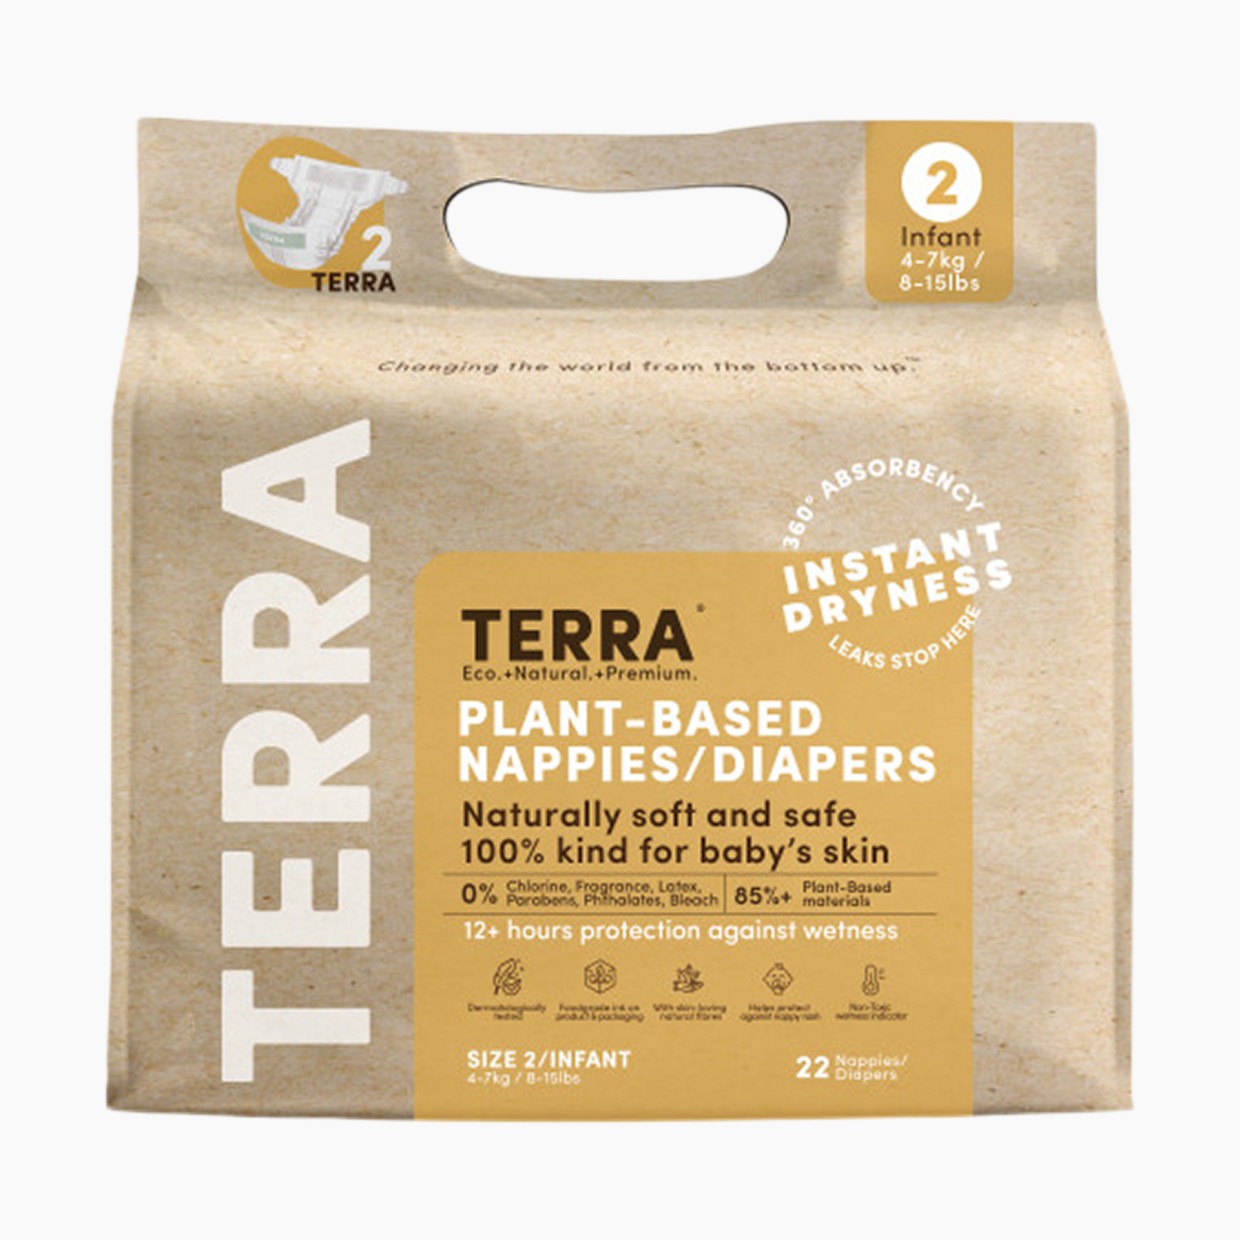 Terra Premium Plant-Based Diapers - Size 2 (176 Ct).